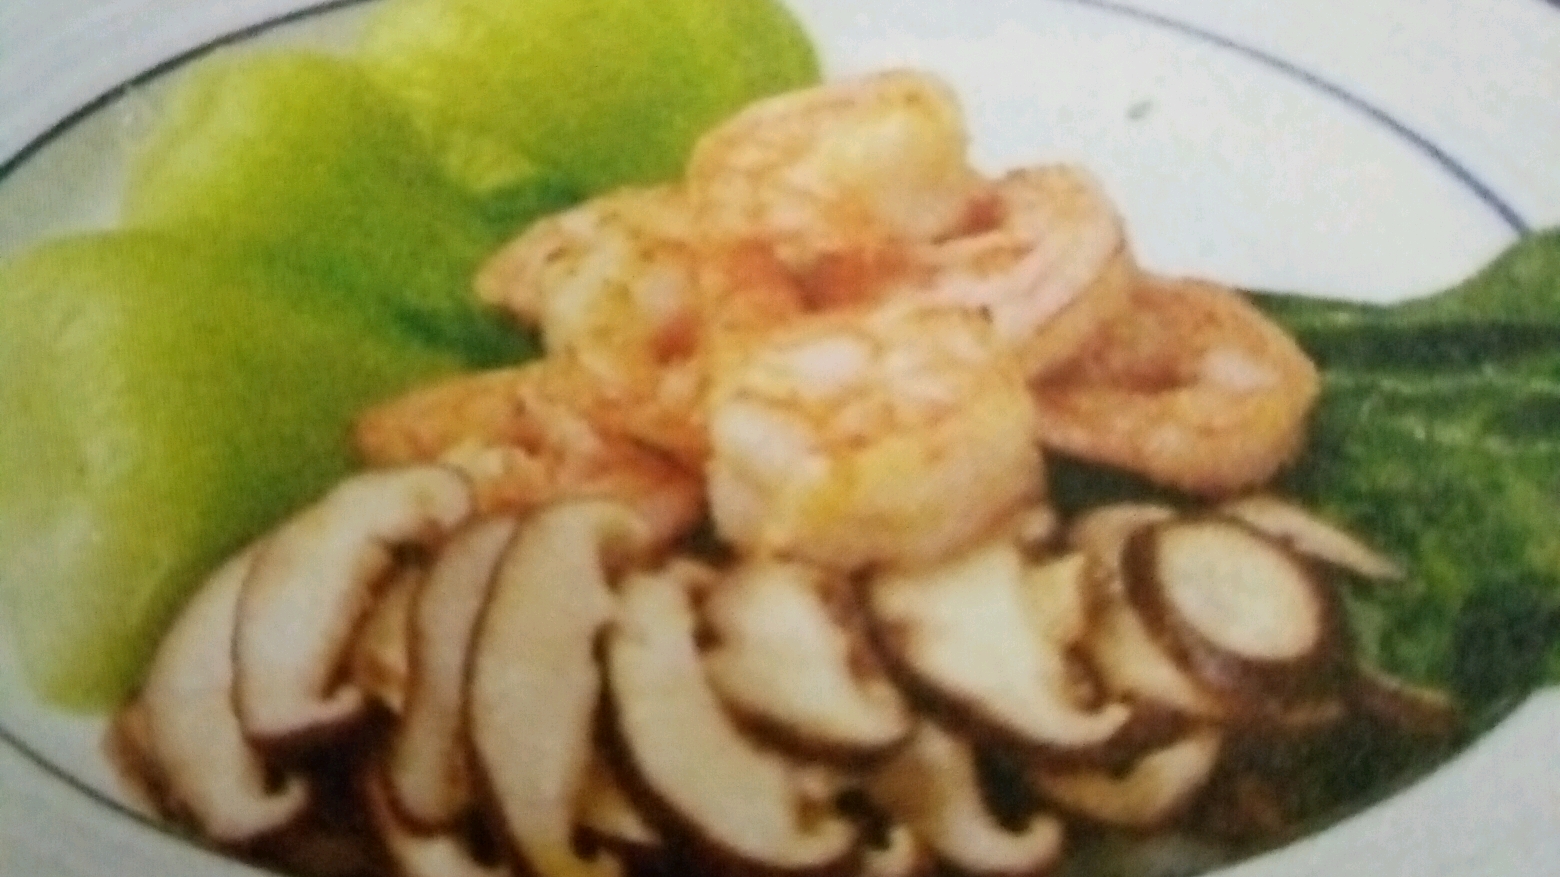 金针菇鲜虾汤,金针菇鲜虾汤的家常做法 - 美食杰金针菇鲜虾汤做法大全